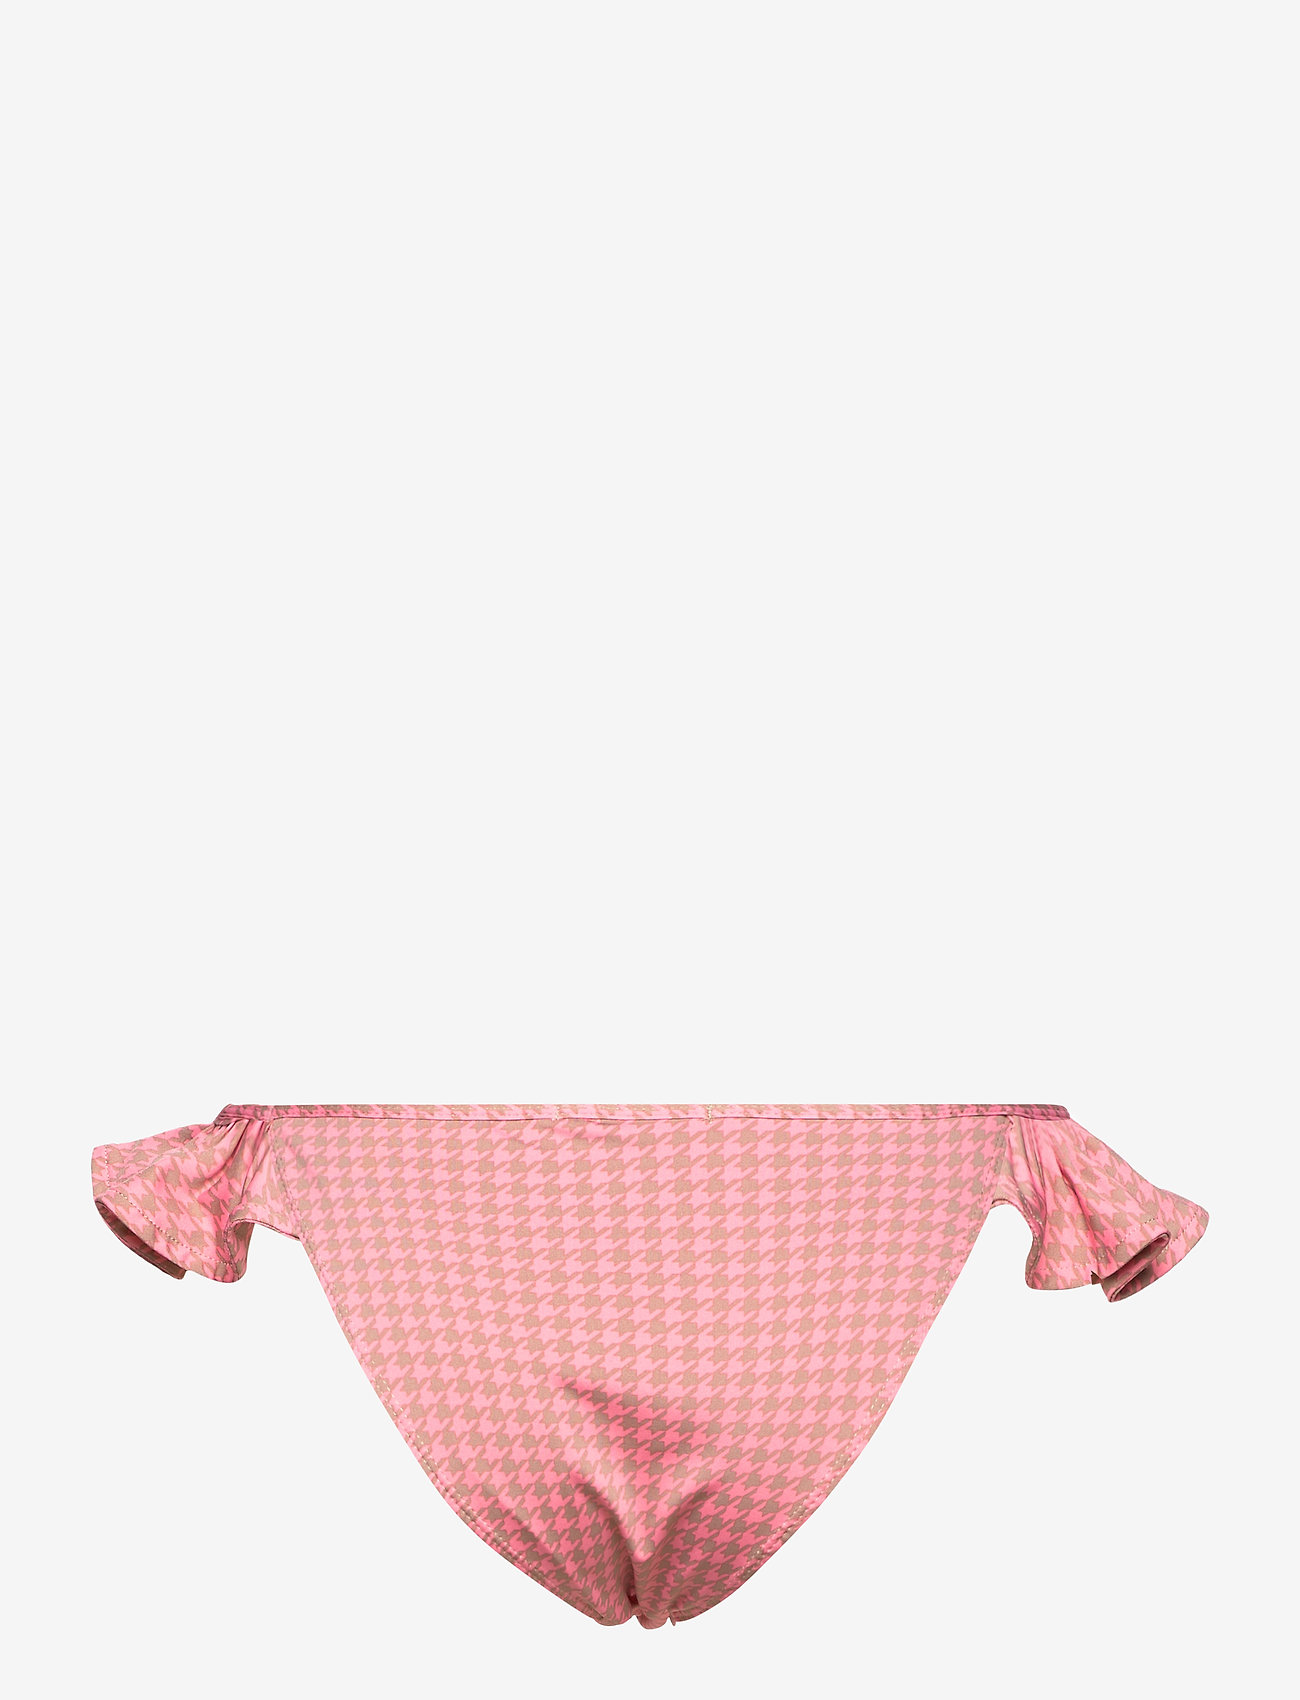 Underprotection - Rita bikini briefs - bikini-slips - pink - 1